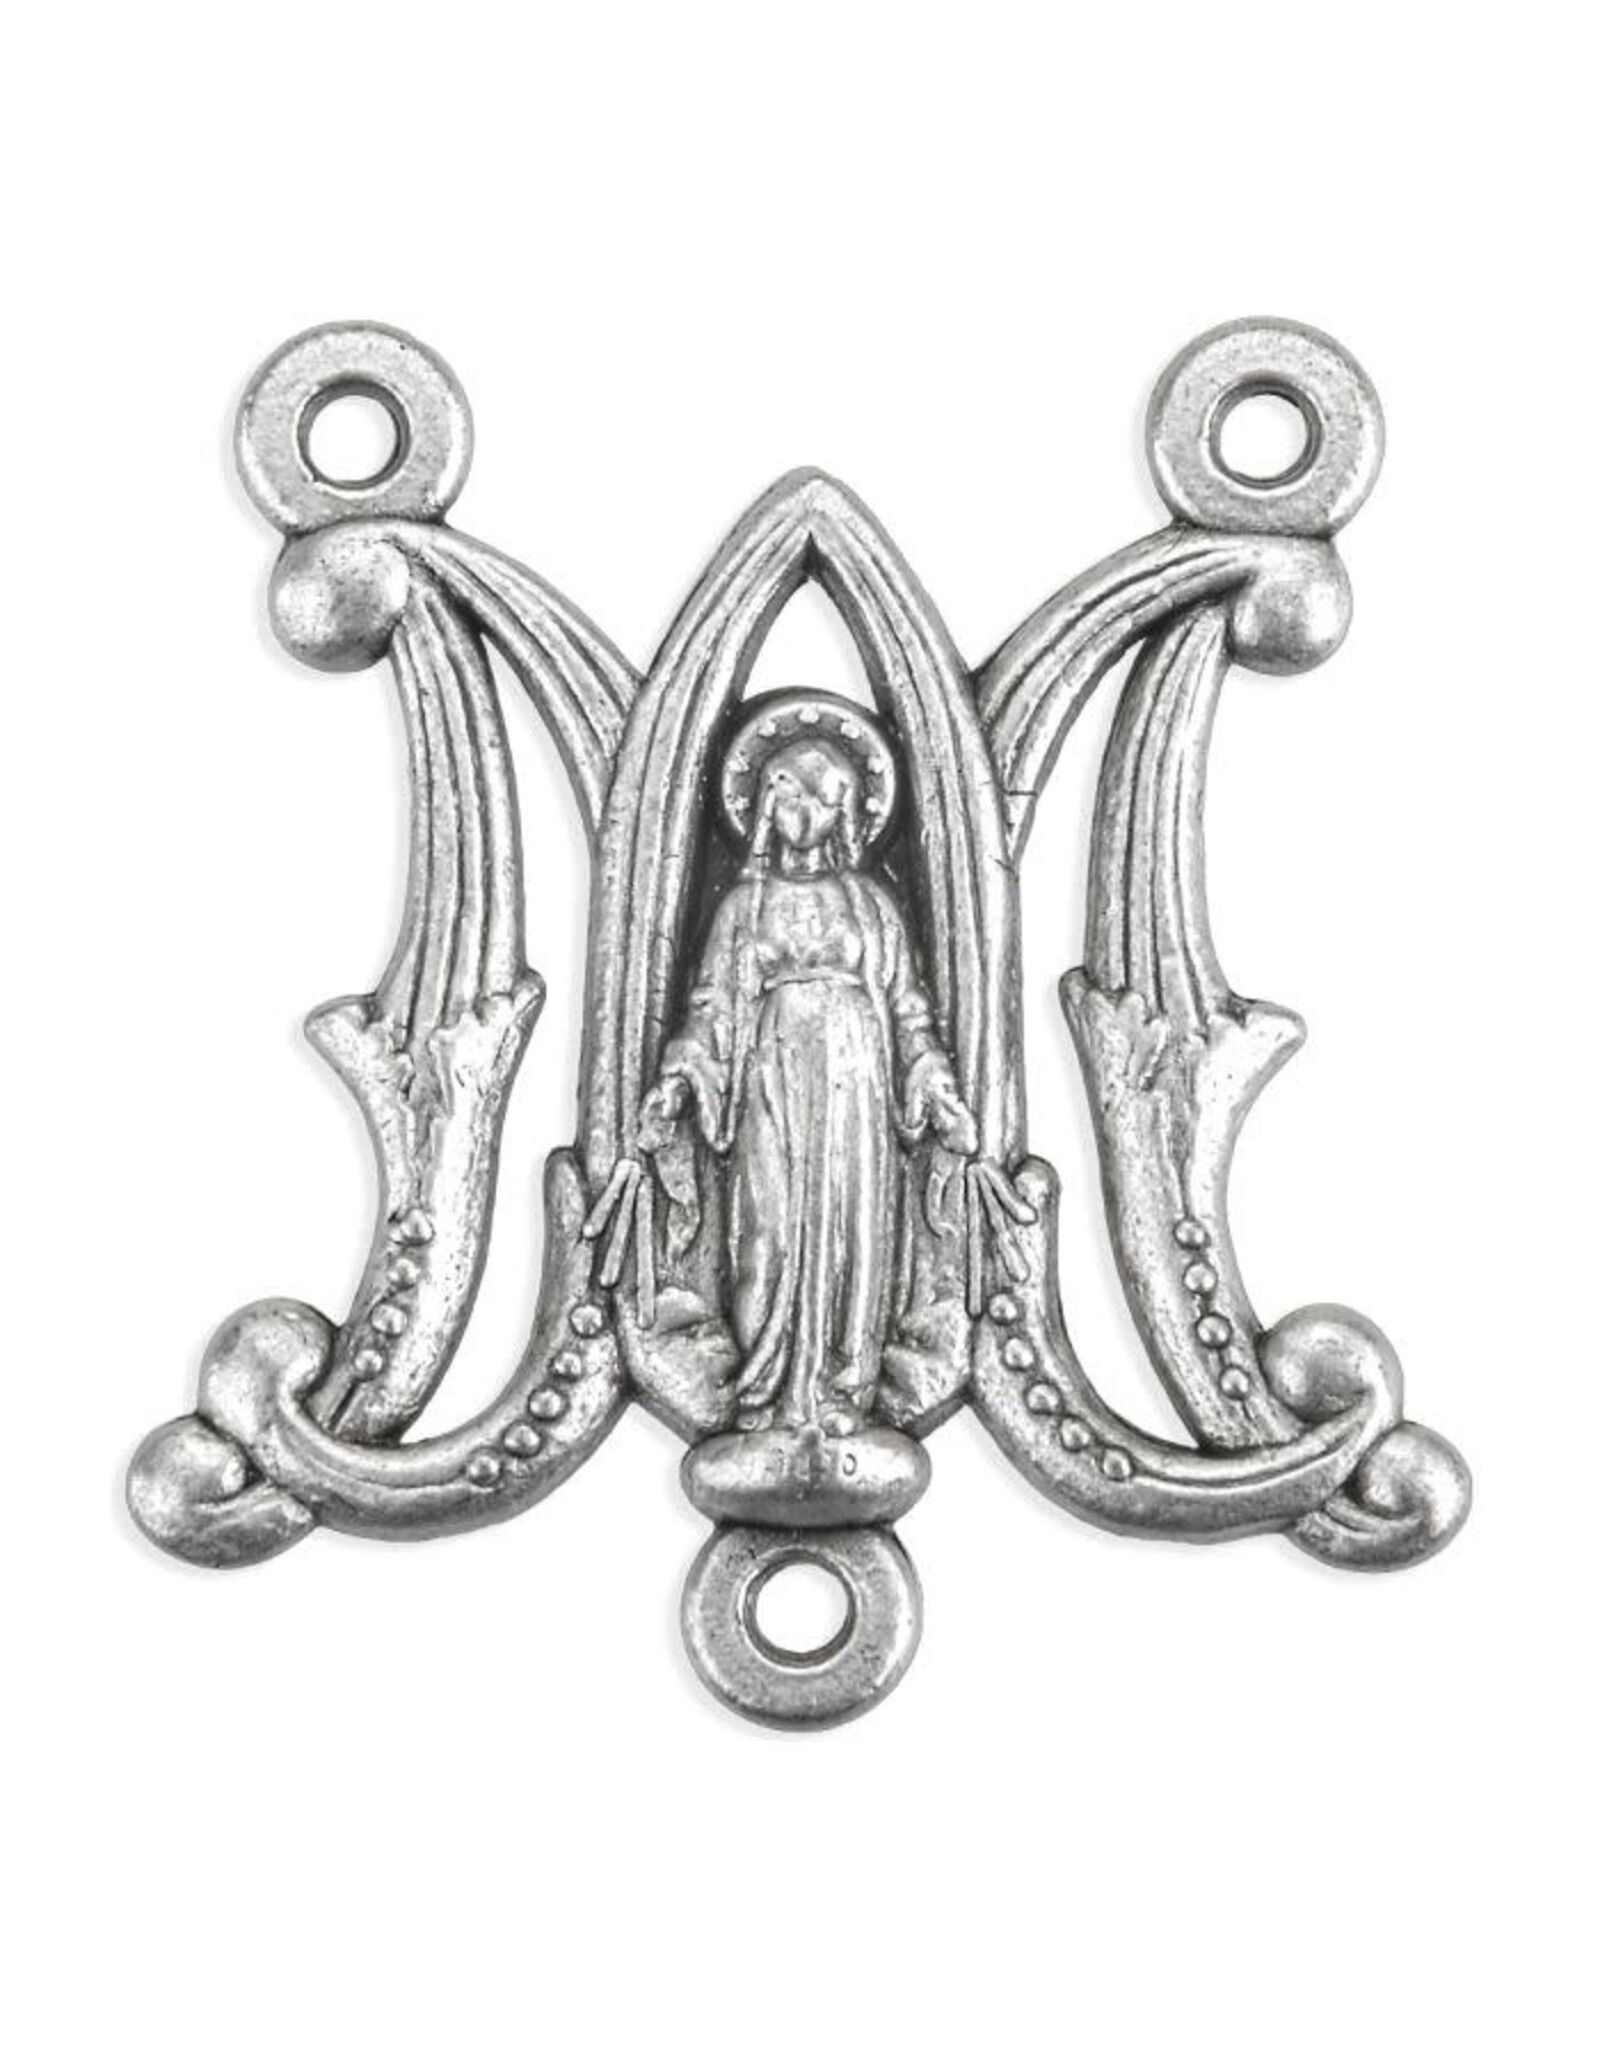 Hirten Rosary Centerpiece - Ave Maria